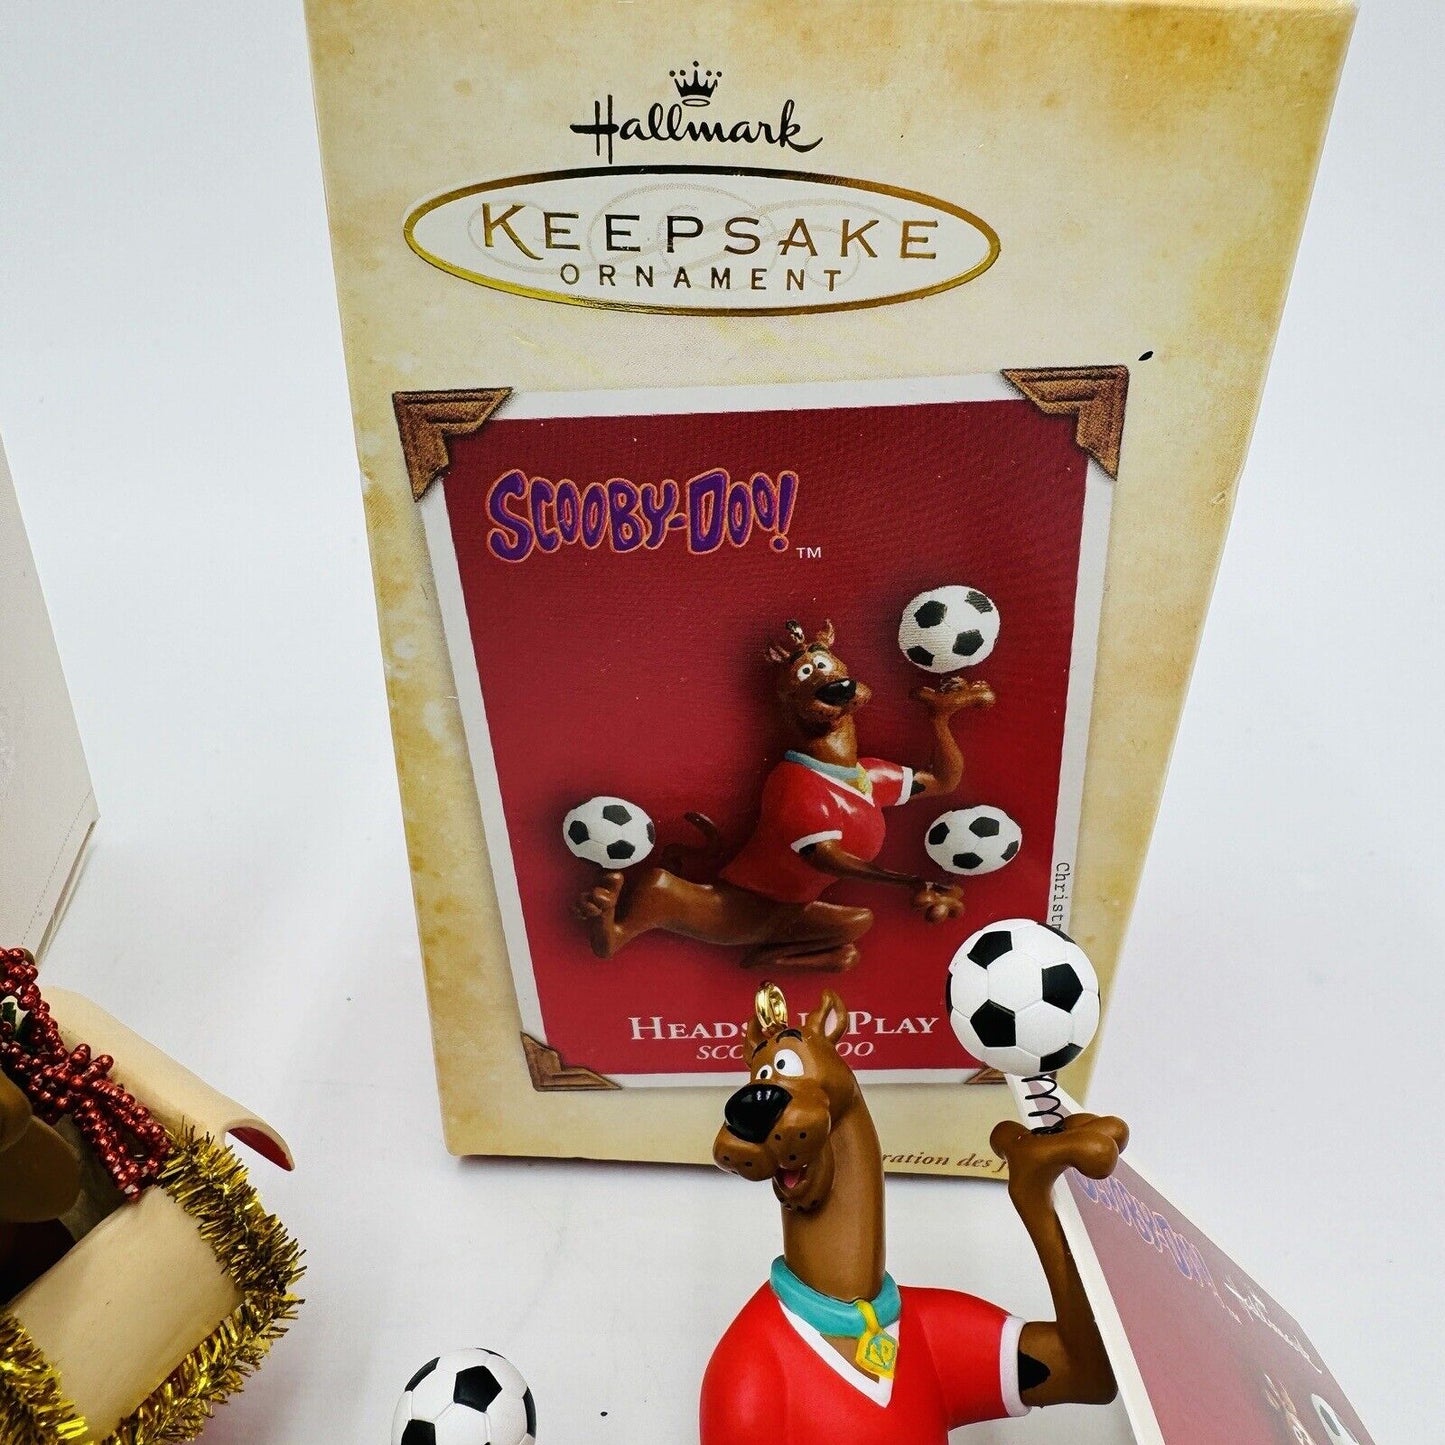 Hallmark Keepsake Scooby-doo Ornaments Christmas Hanging Set 2 Pieces